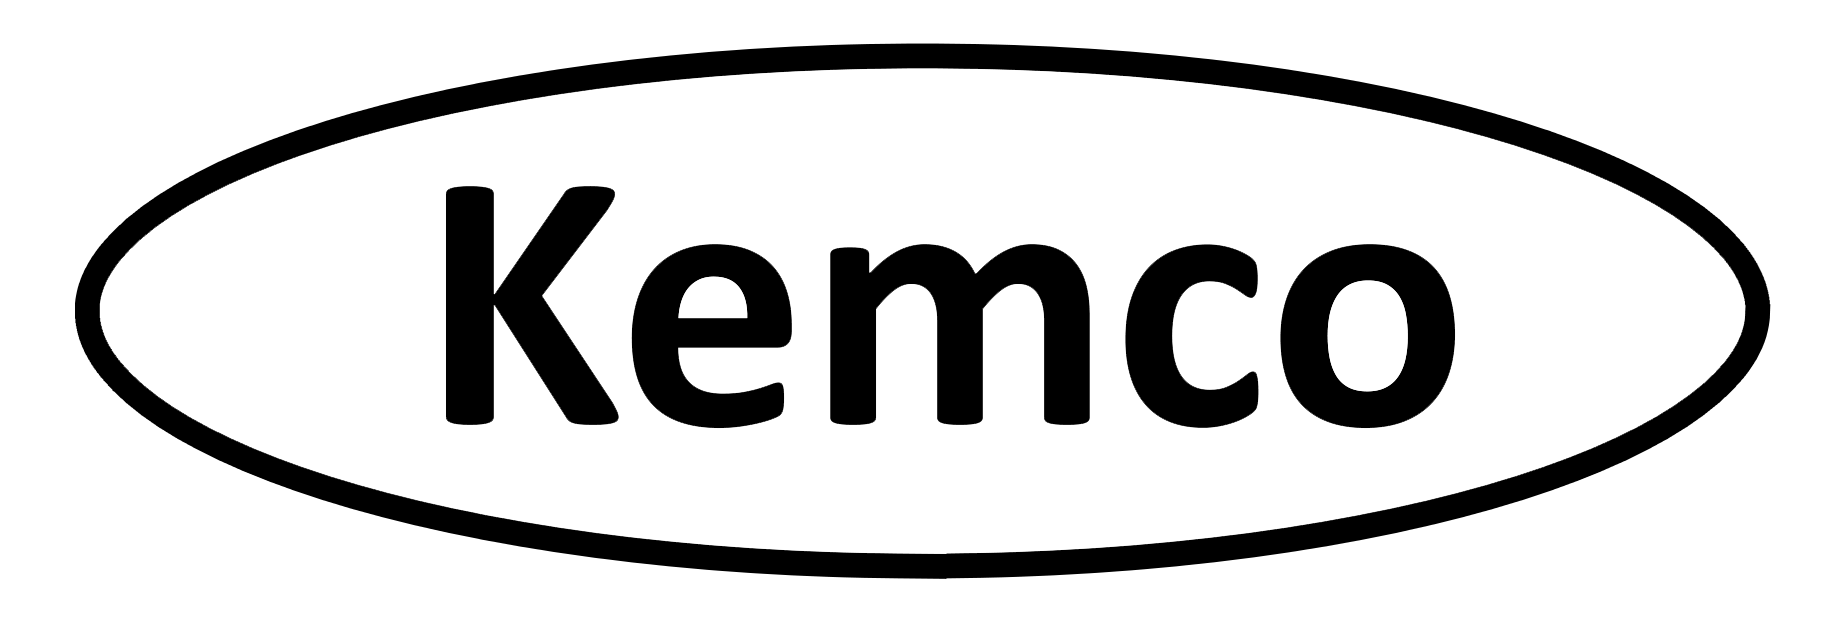 Kemco-Logo-1.png